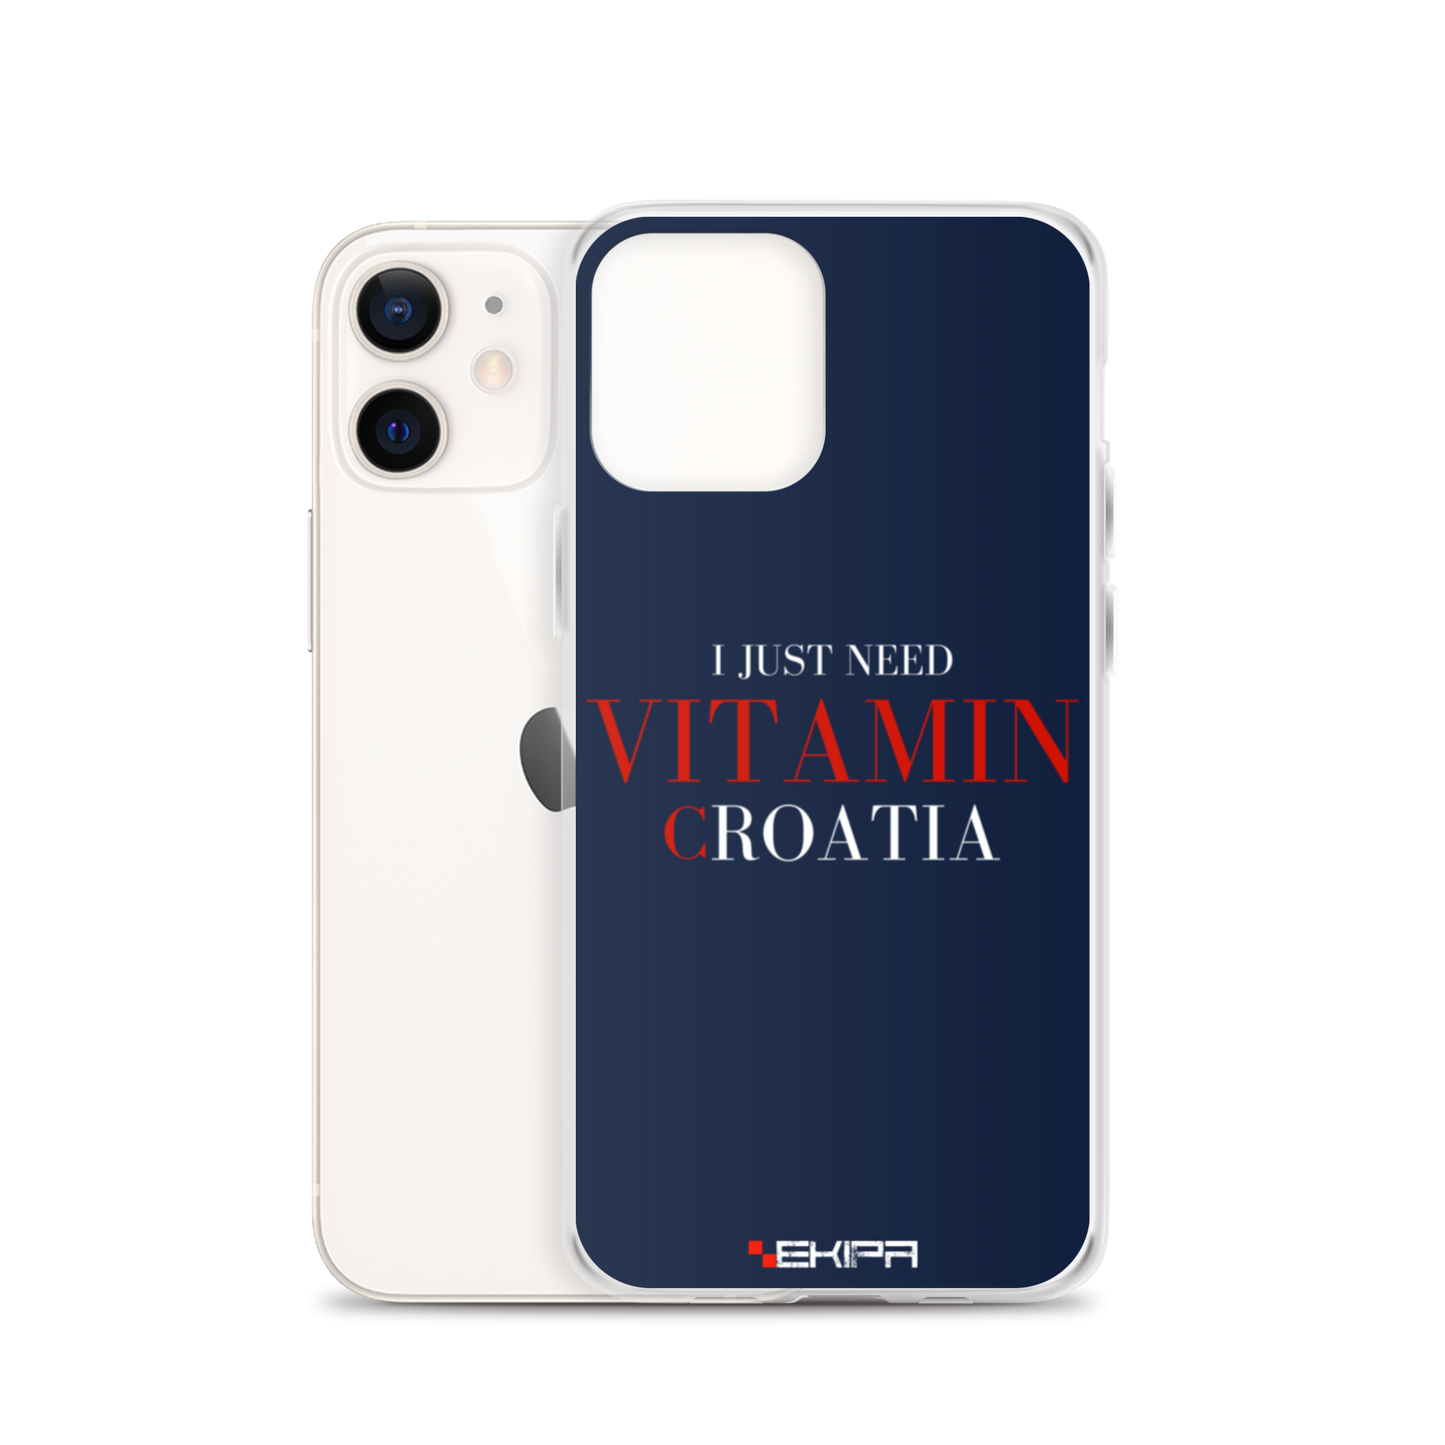 "Vitamin Croatia" - iPhone Hülle